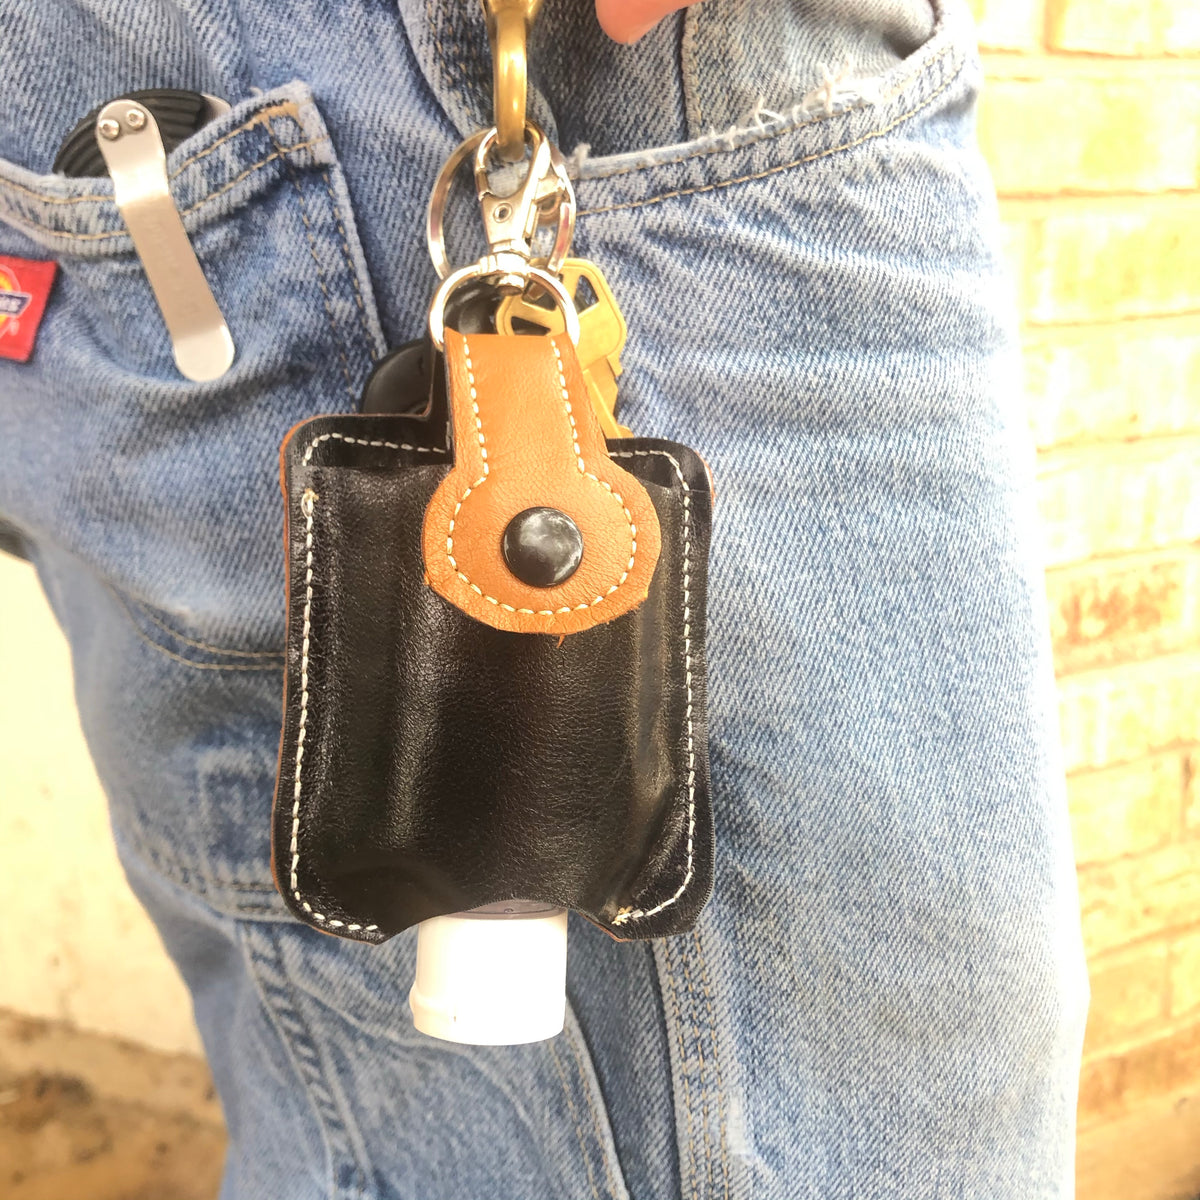 Genuine Leather Animal Print Hand Sanitizer Holder. - Clip To Your Purse,  Bag, or Diaper Bag - Key Ring to Hold Your Keys - Fits Up to 1 Fl Oz  Sanitizer Bottle 